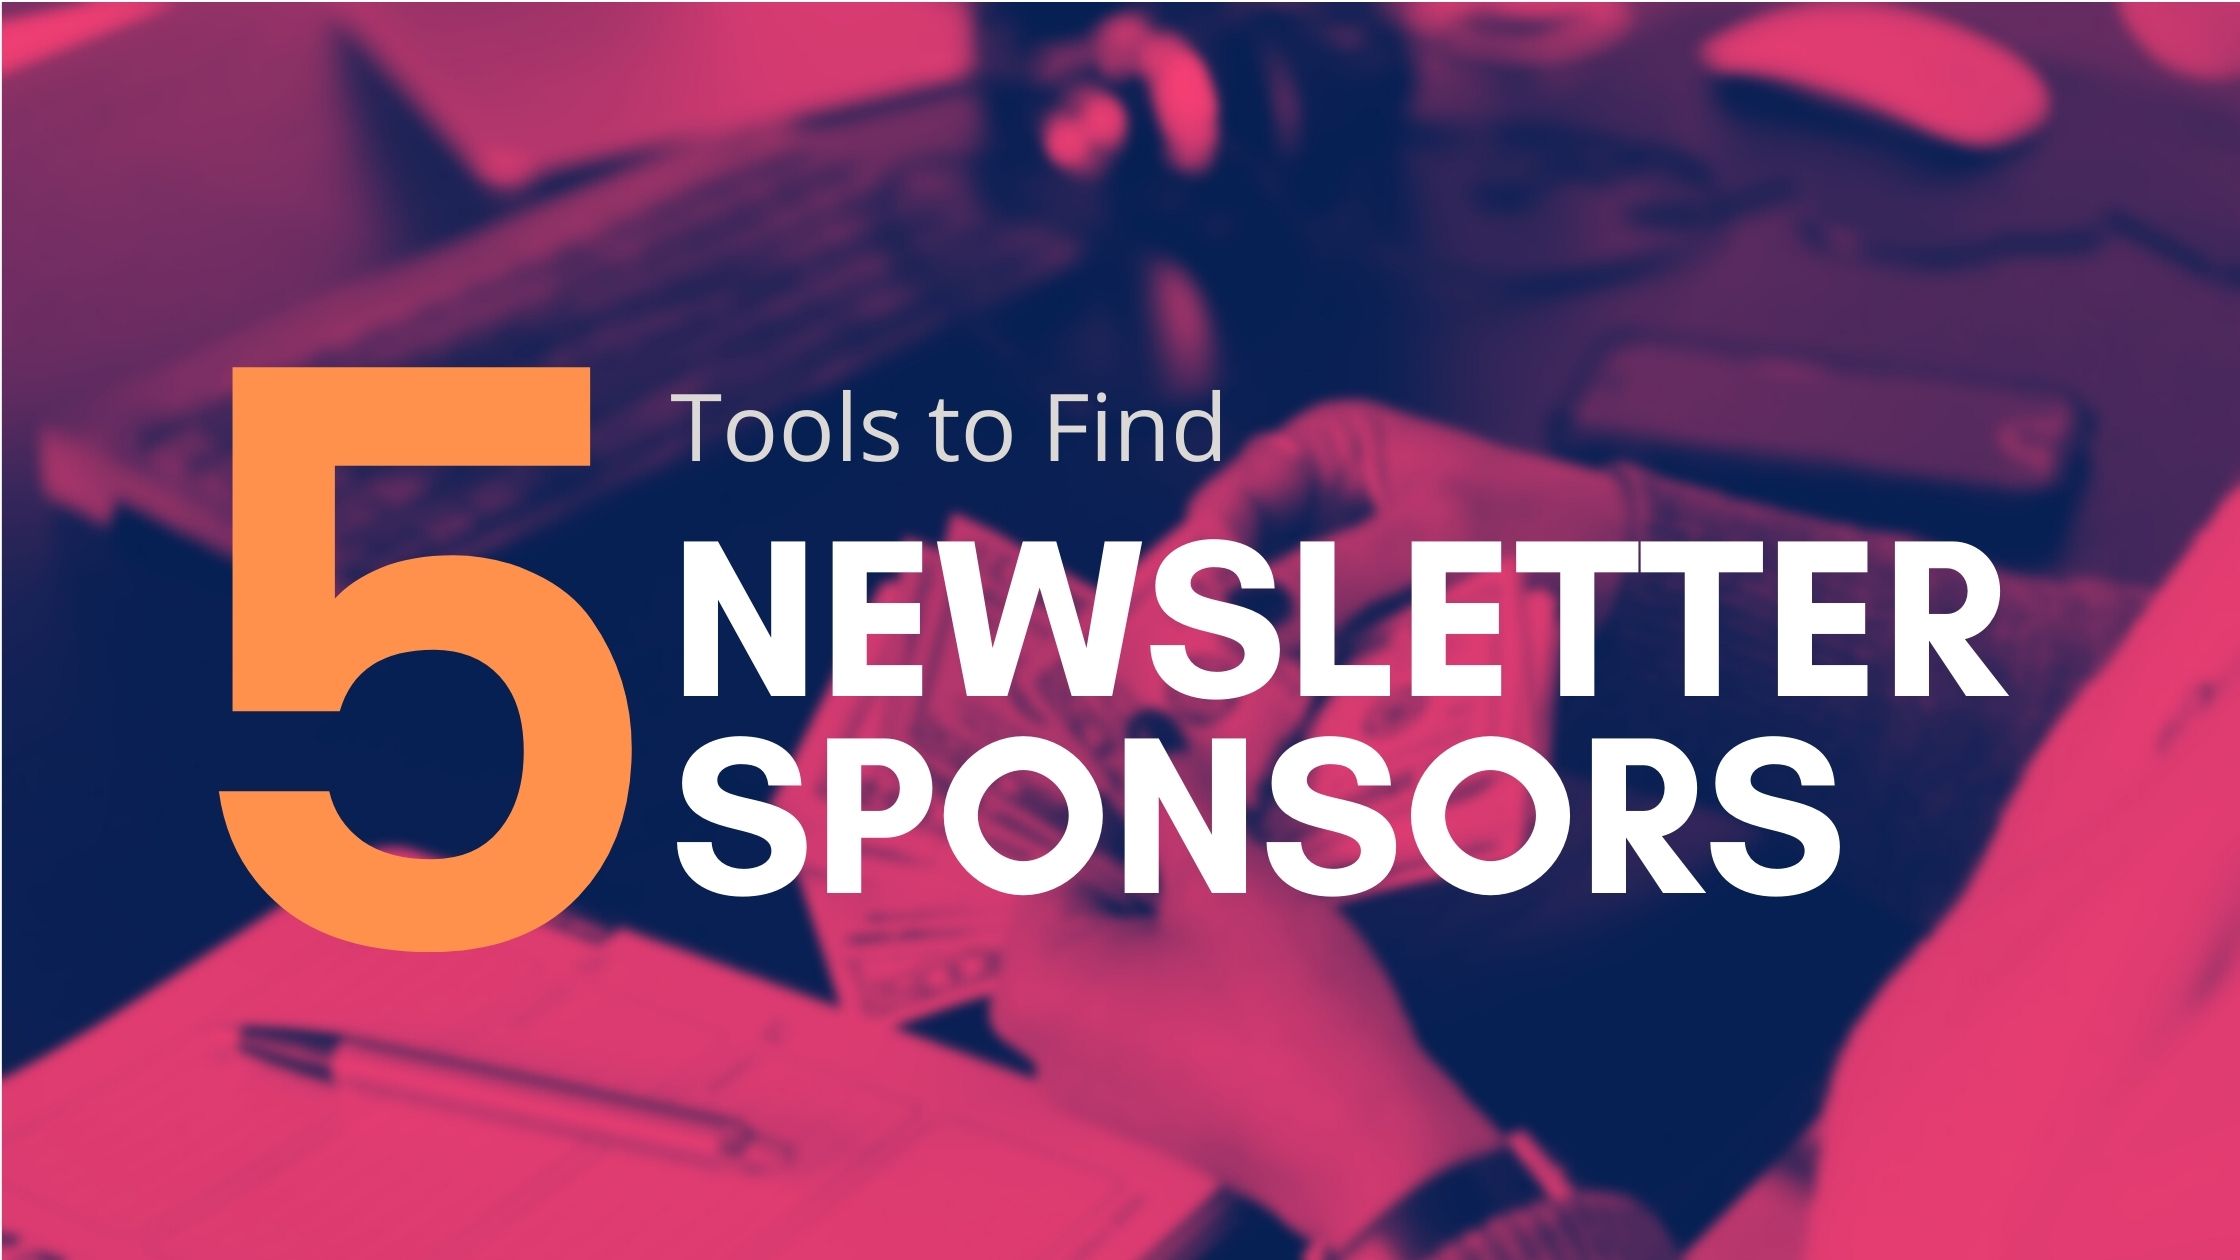 5 Tools For Finding Newsletter Sponsors image